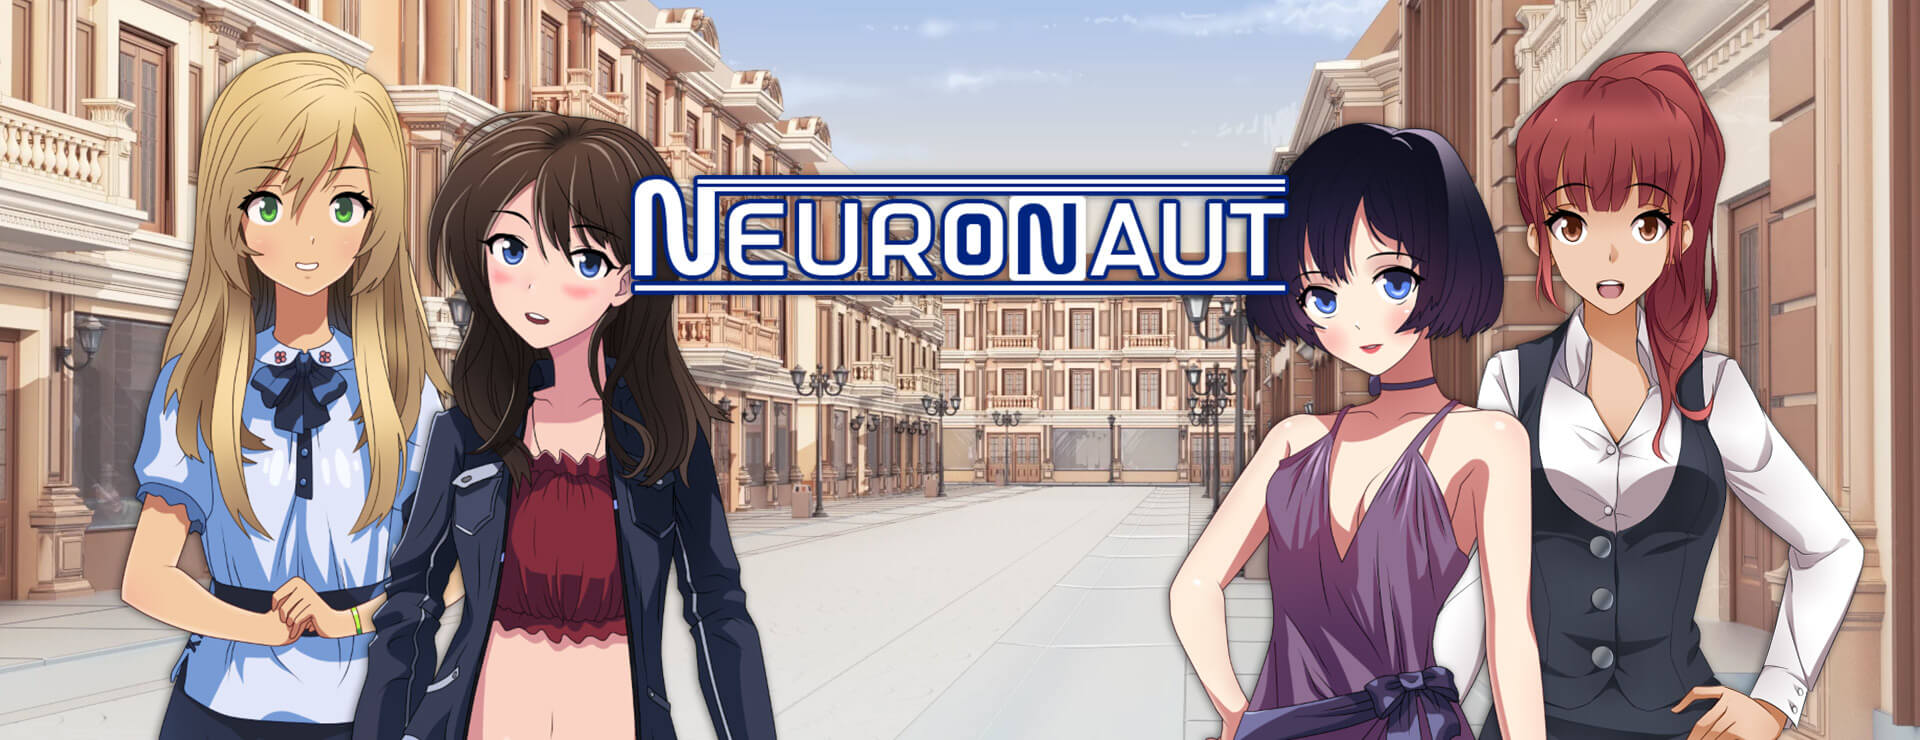 Neuronaut - Action Adventure Game